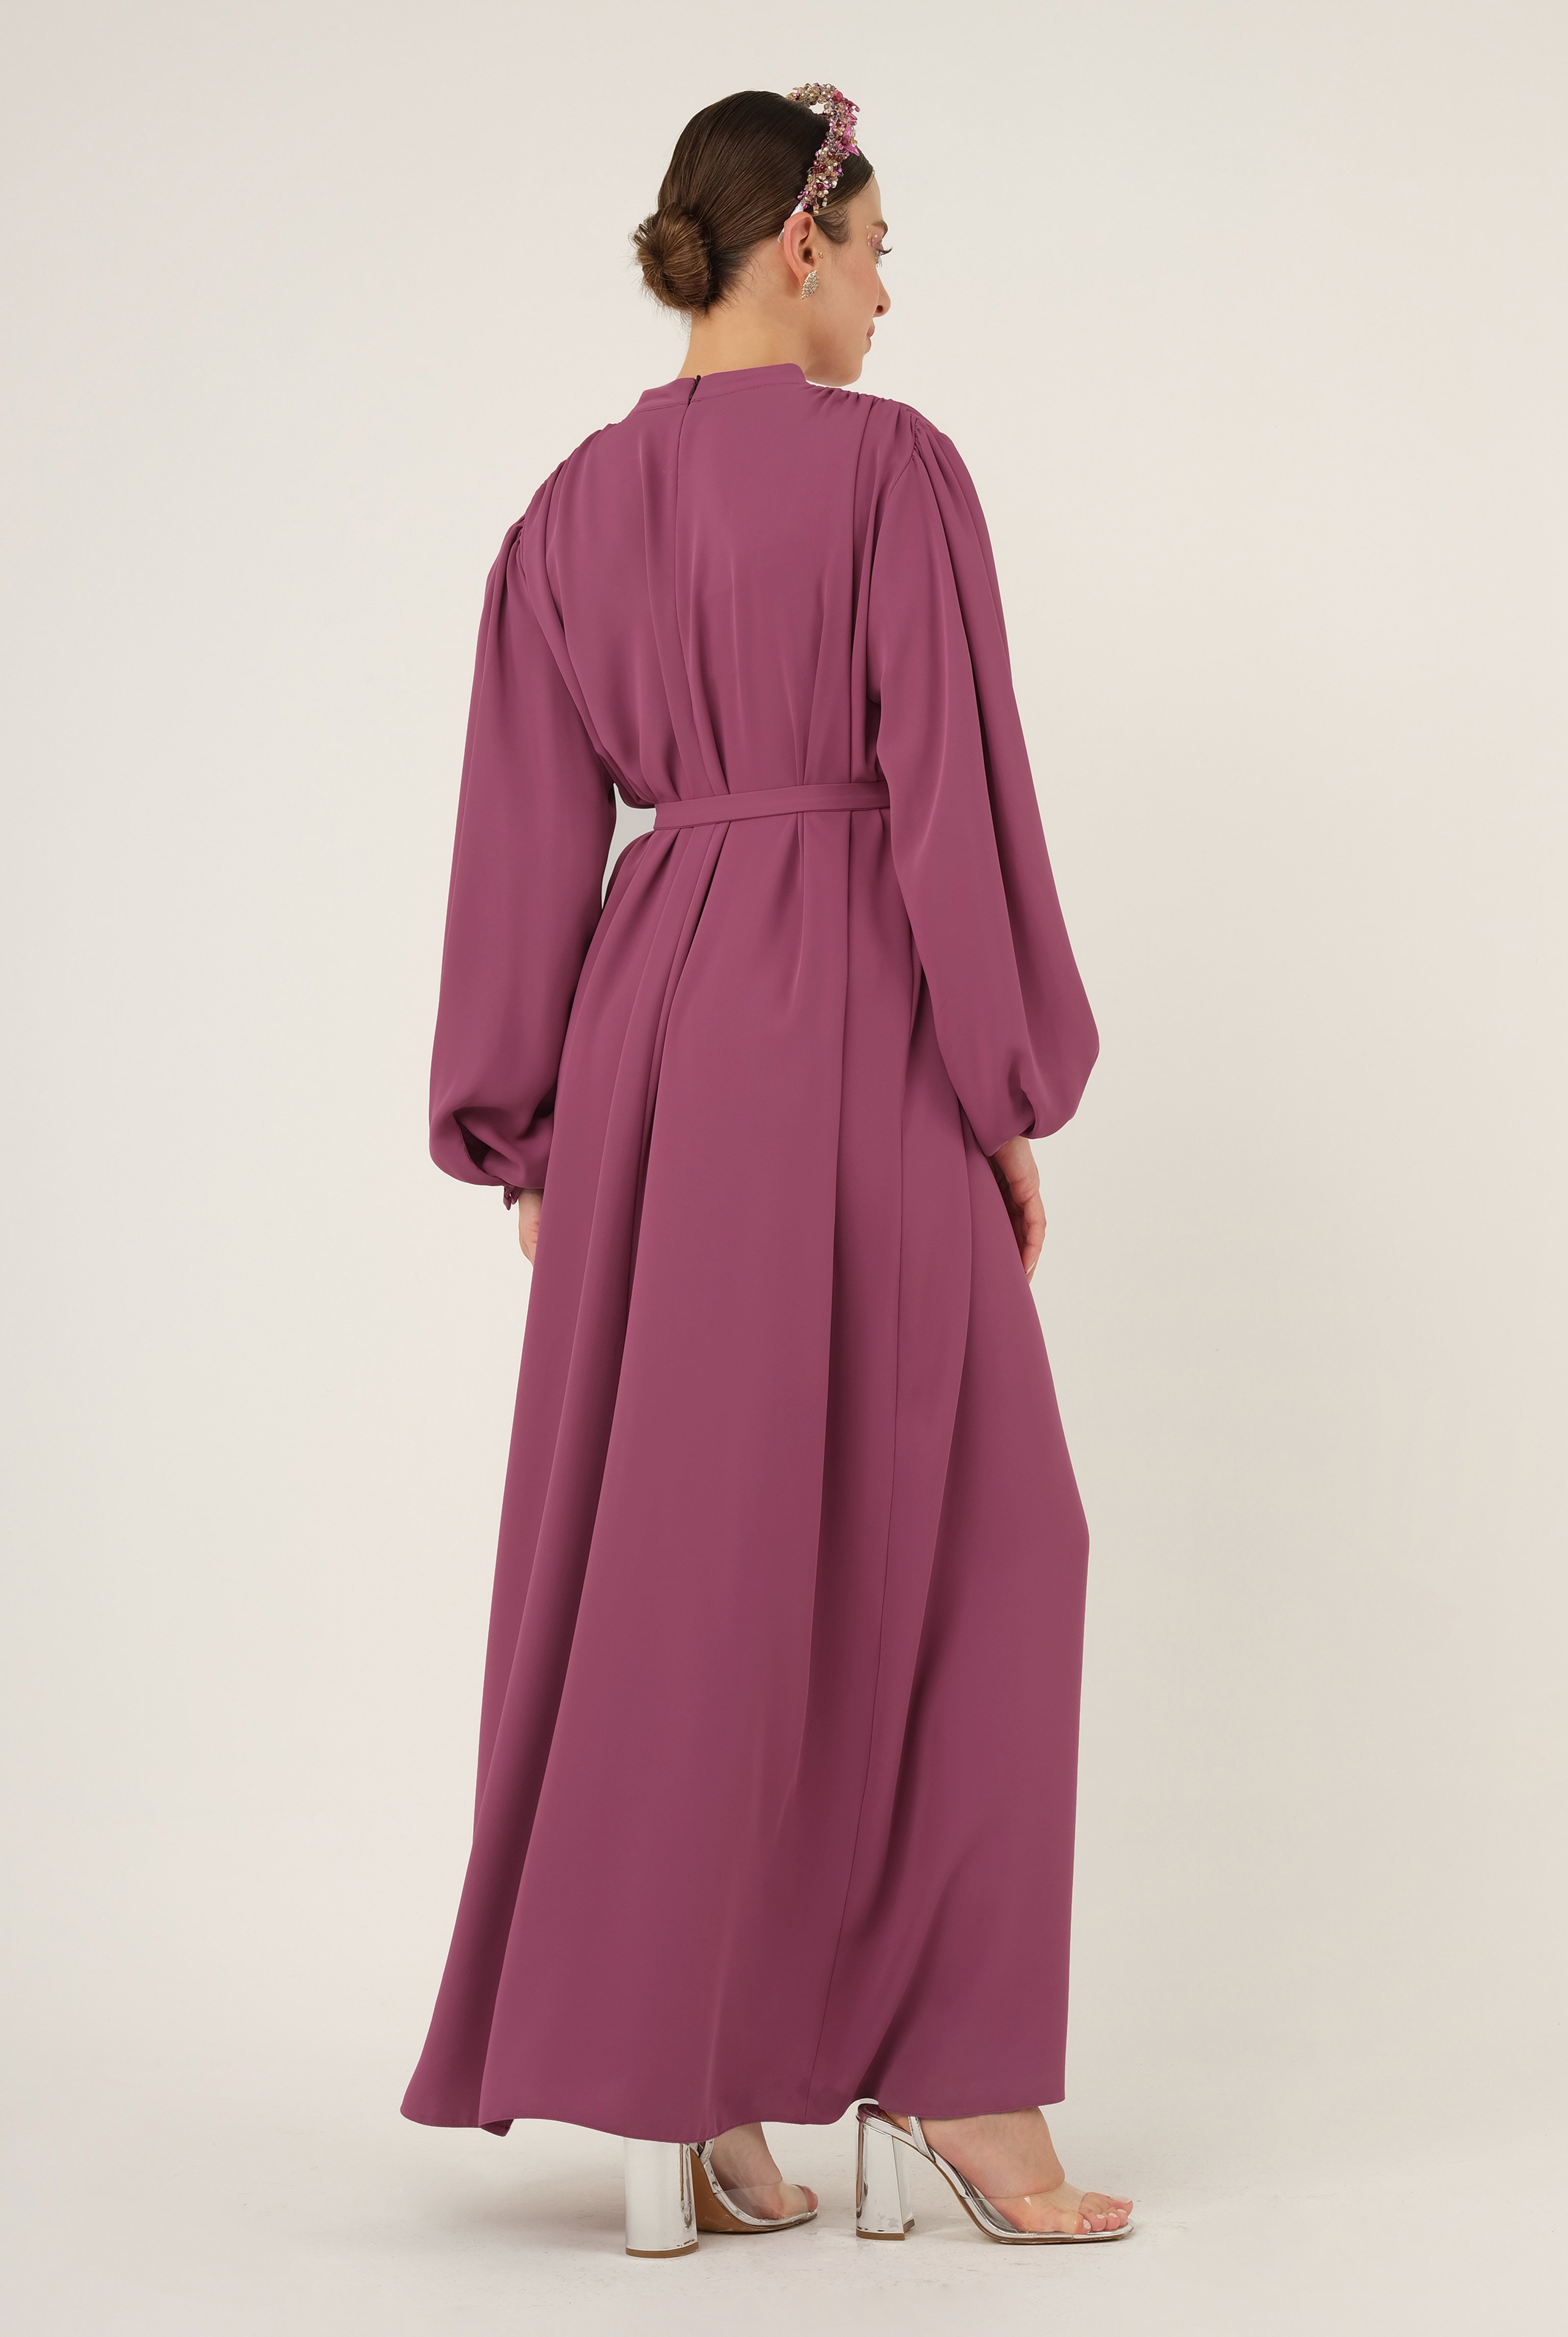 Shirred Collared Dress Damson Color 